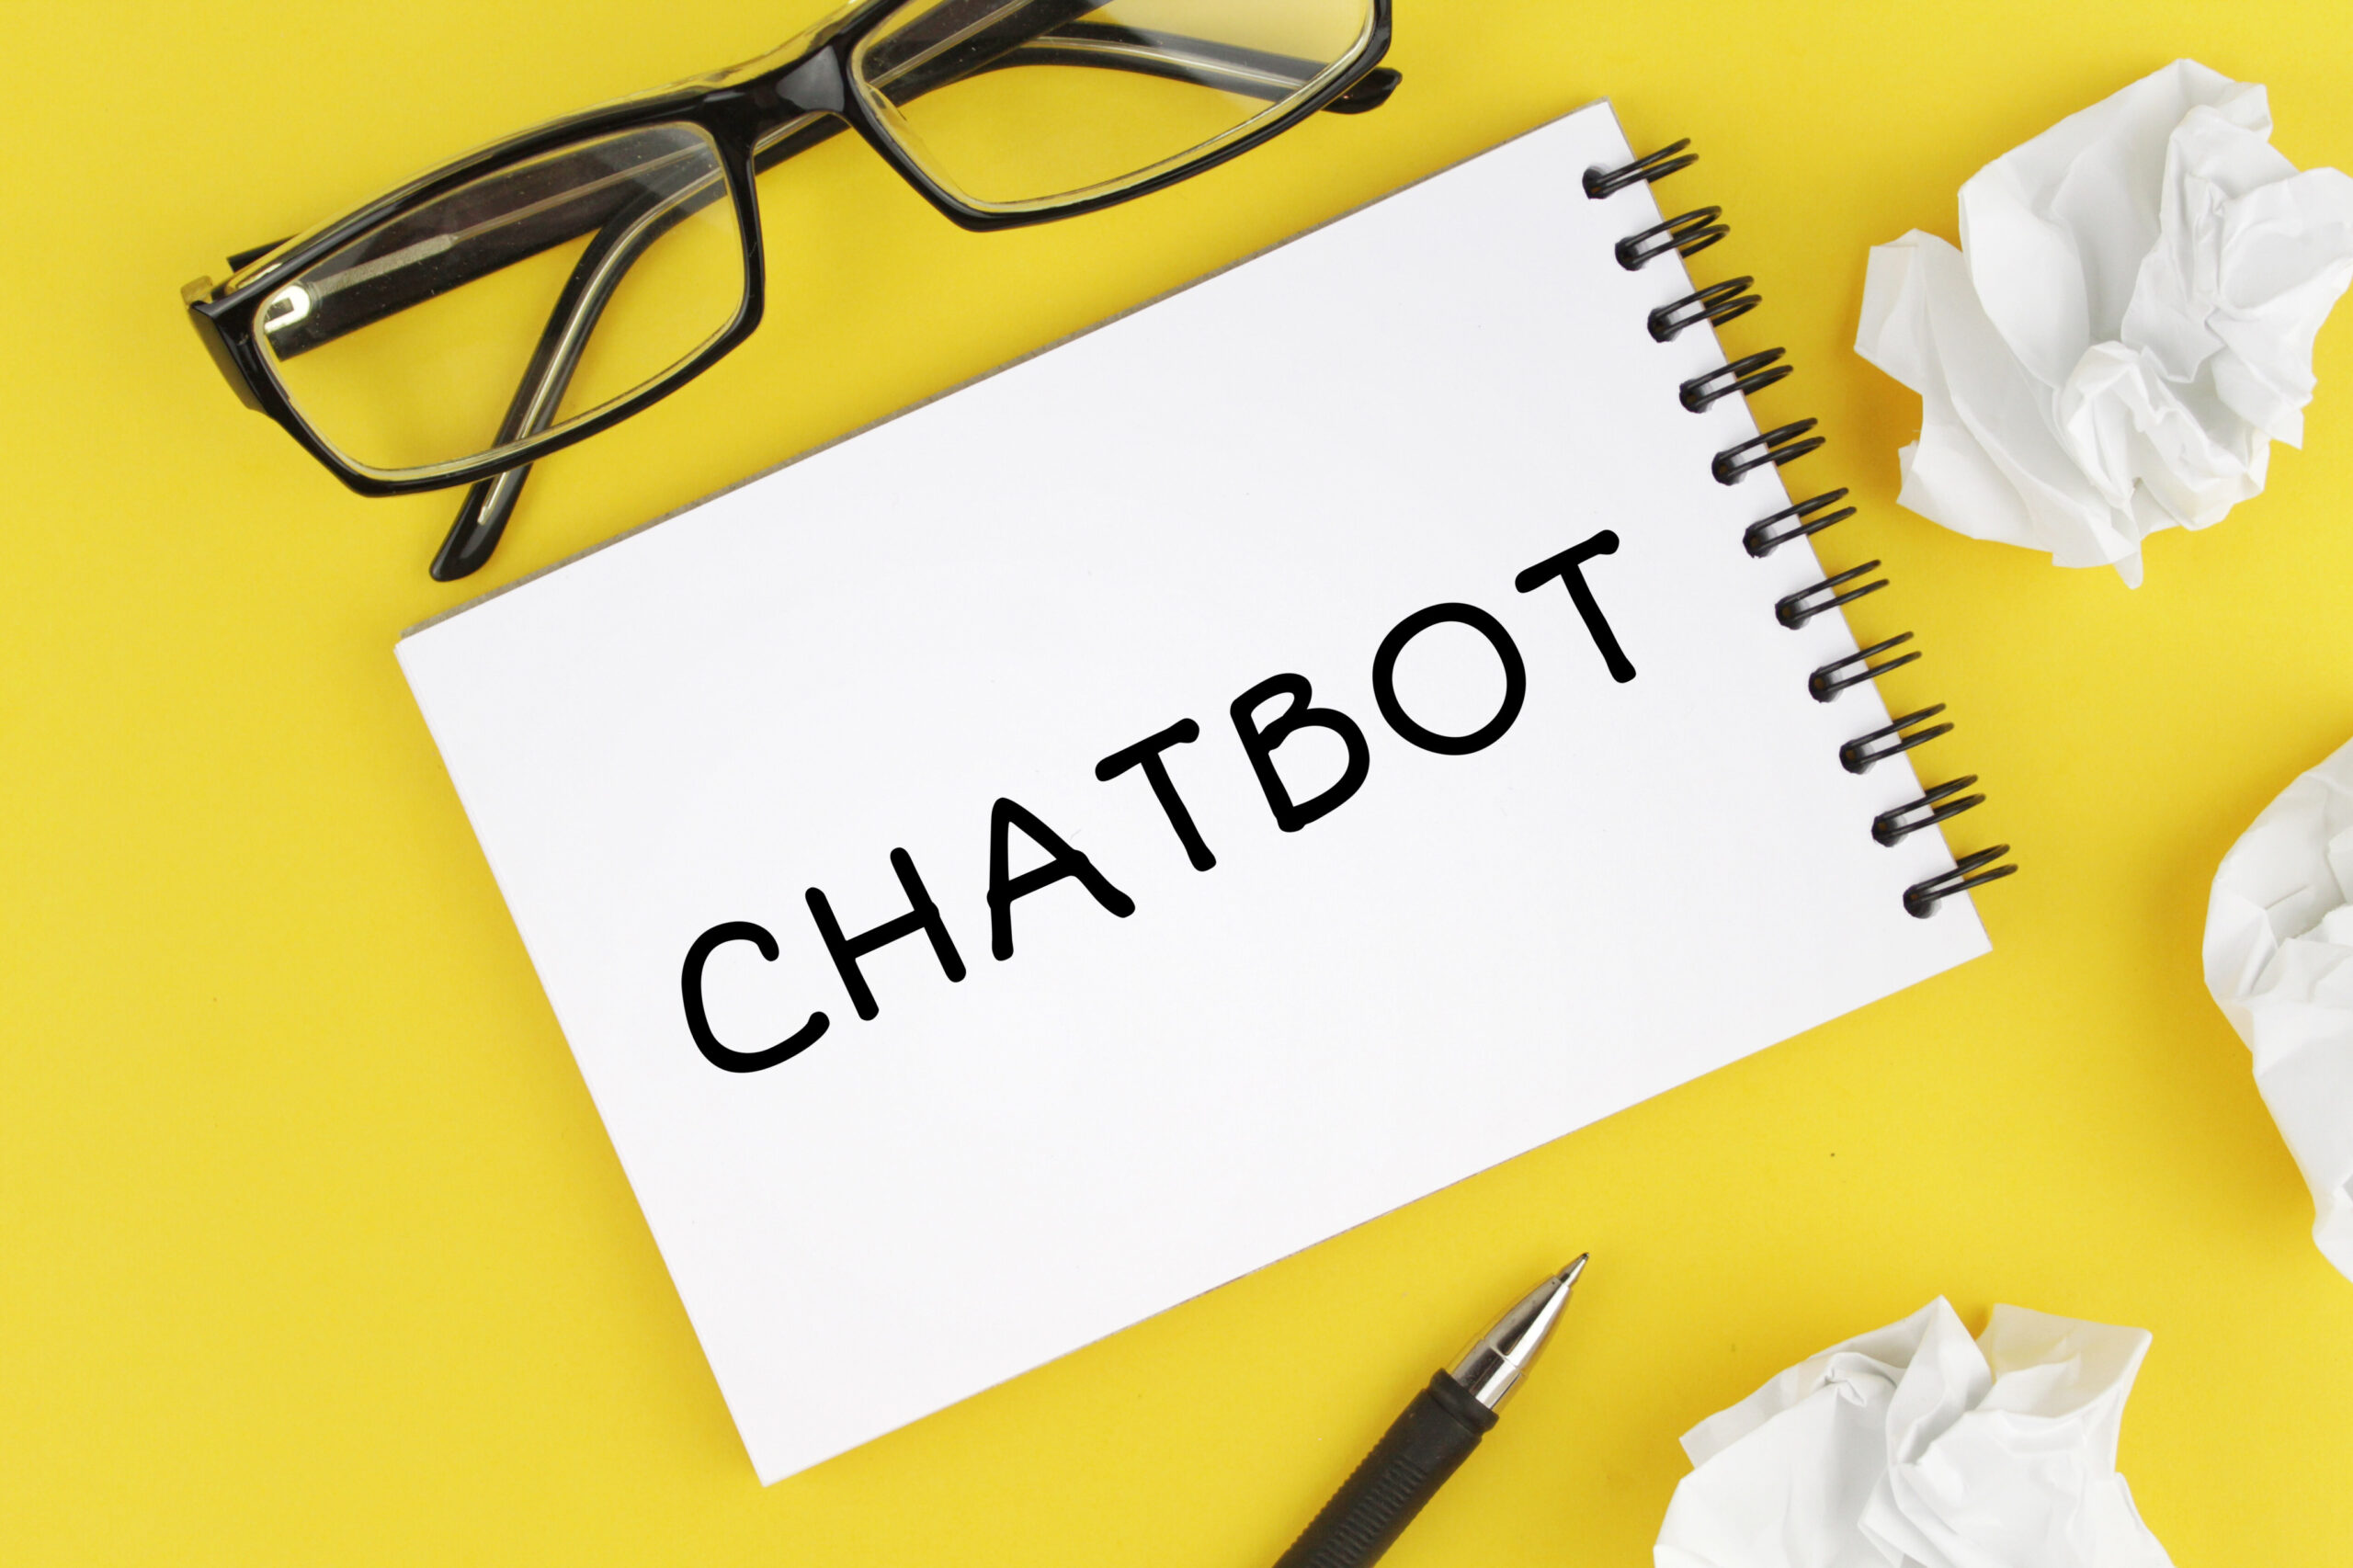 Chatbot written on notepad sitting on desk